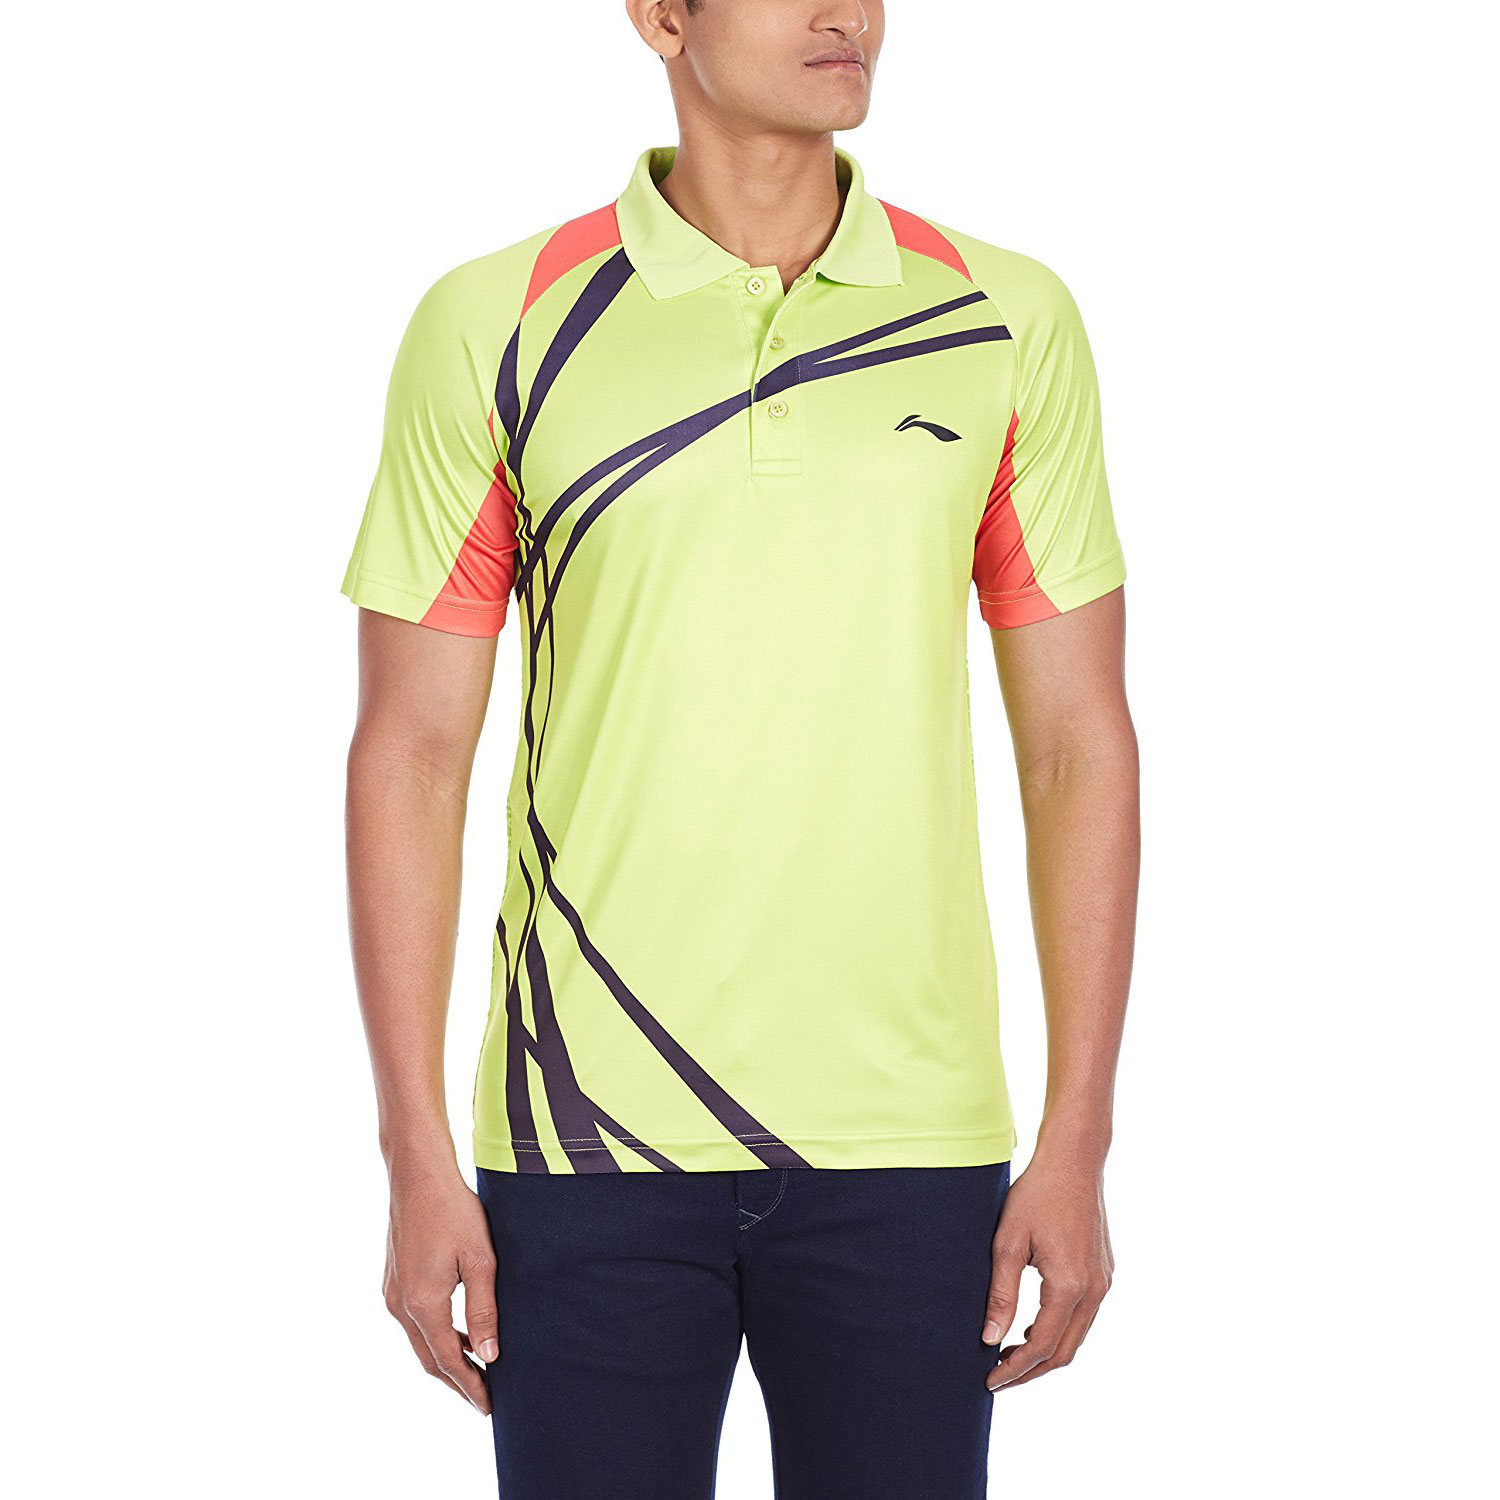 Li-Ning ALPH423-6 Collar Badminton T-Shirt, Men's (Green) 